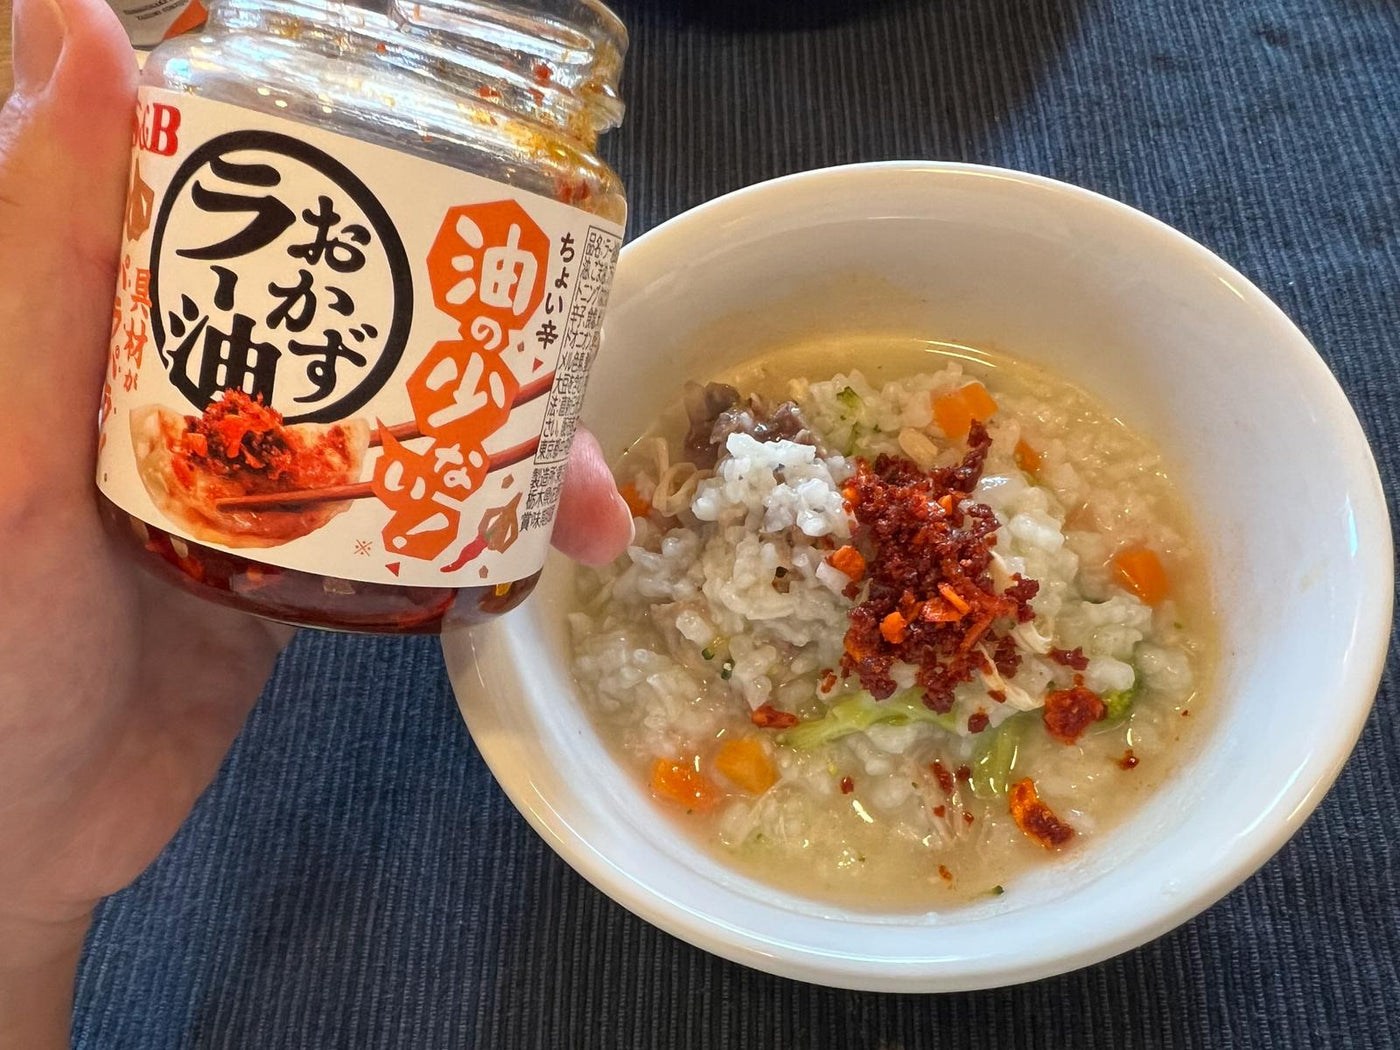 "S&B" Okazu Garlic Chilli Flakes w La-Yu (Less Oil) 75g